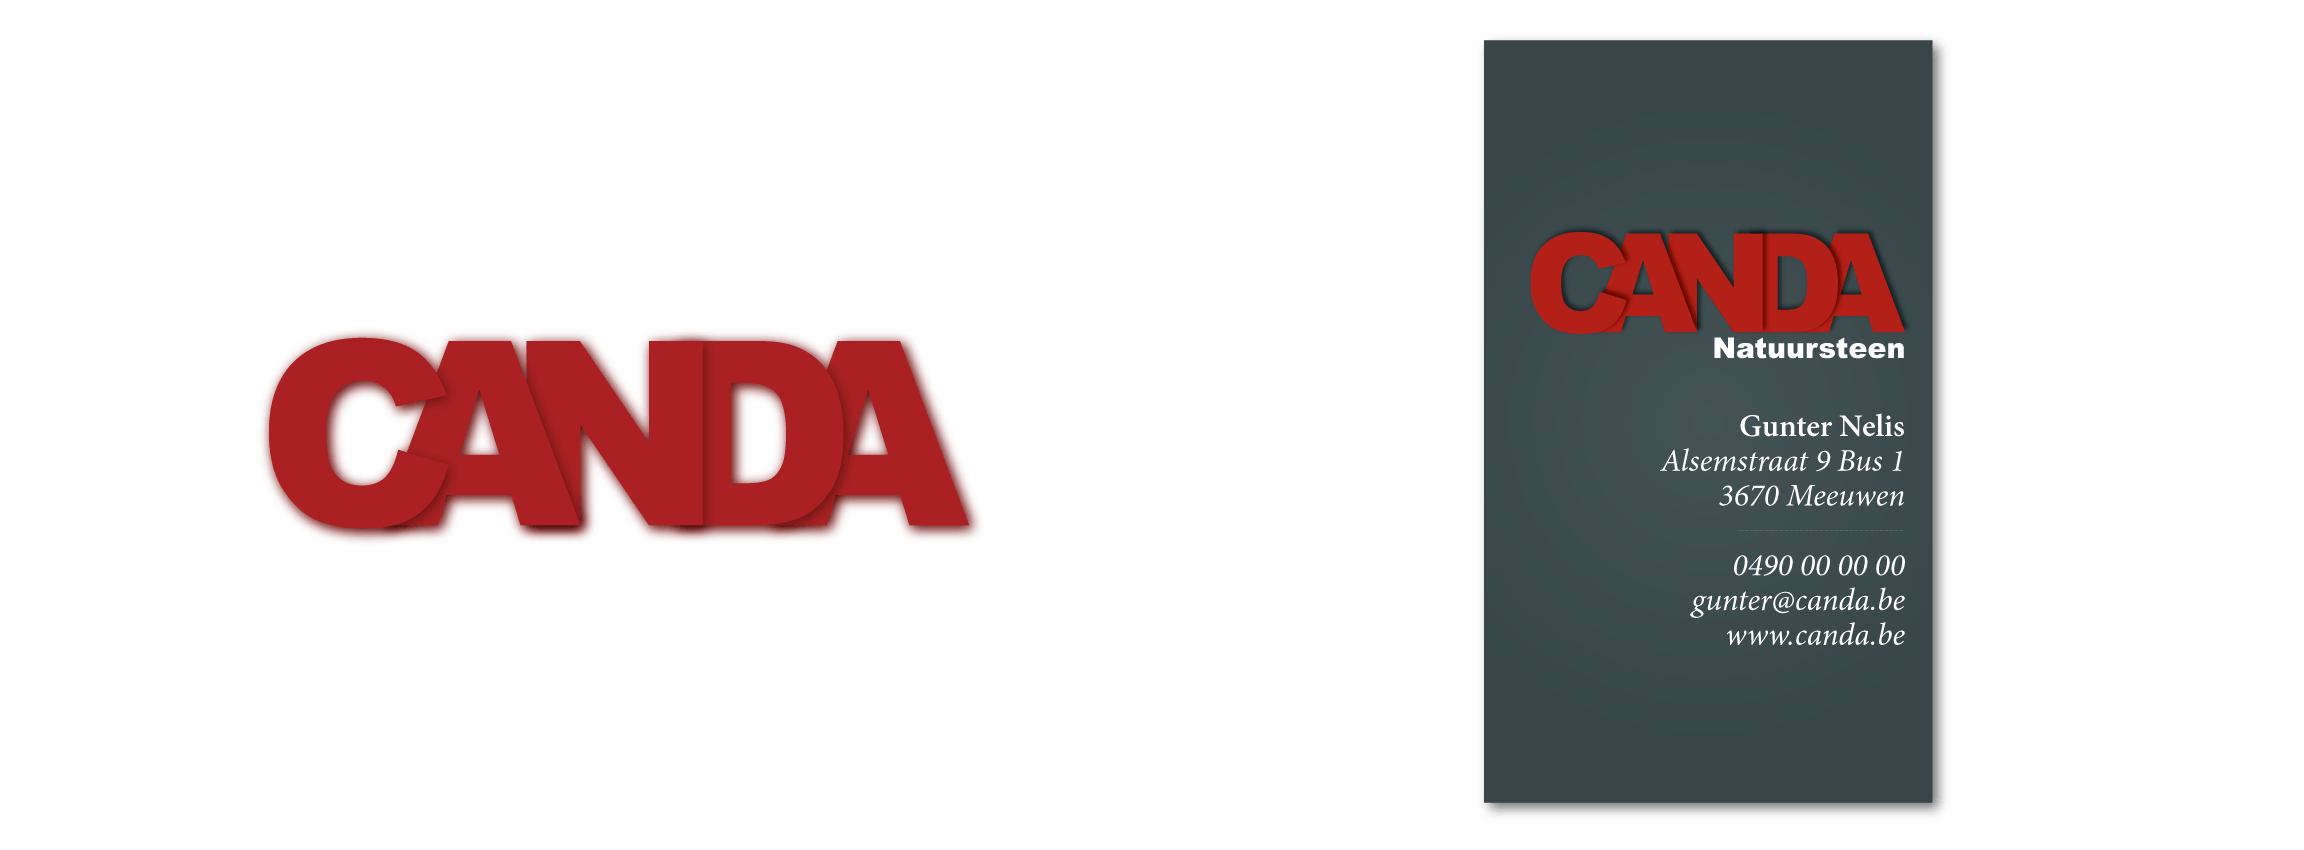 Canda Logo - Jelle Vervaeren — Designer: Portfolio